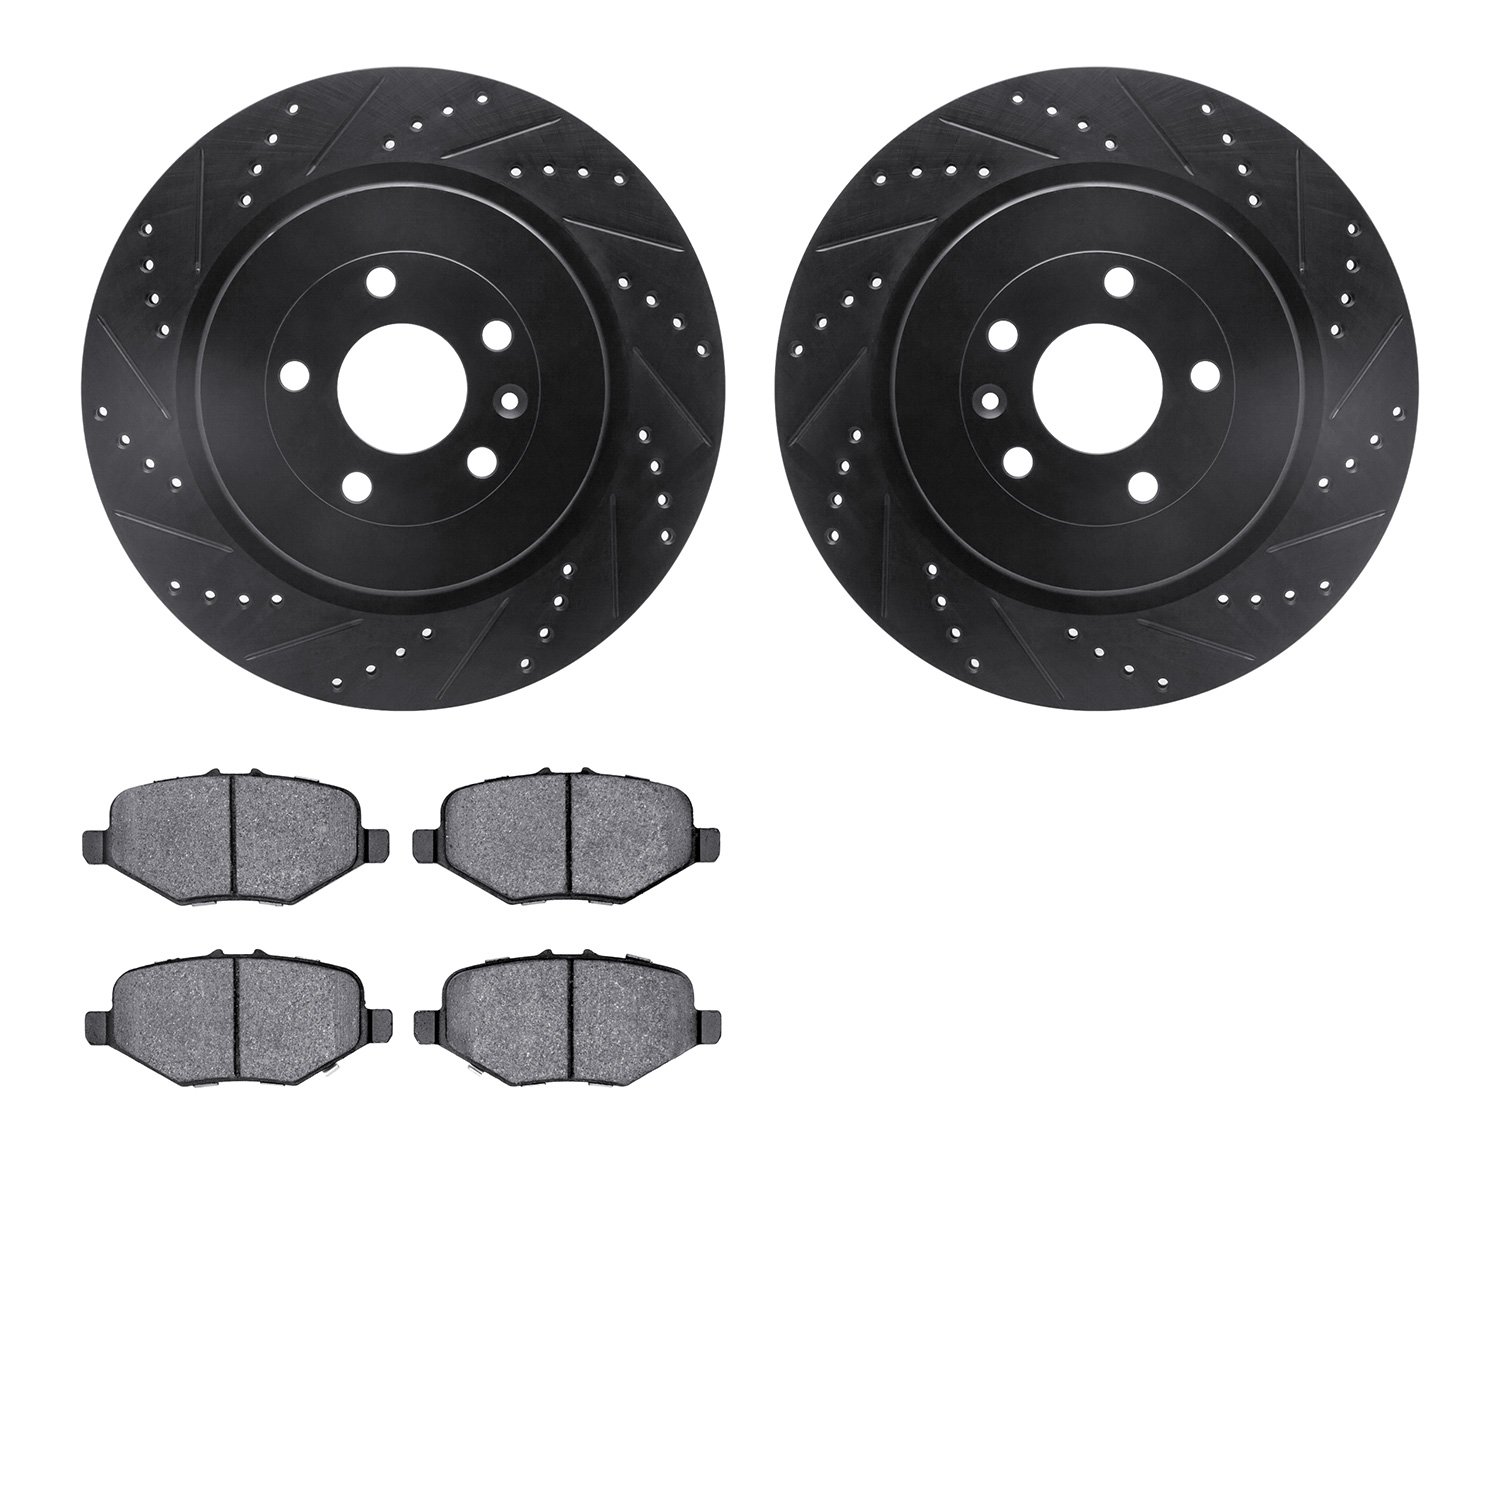 8302-54215 Drilled/Slotted Brake Rotors with 3000-Series Ceramic Brake Pads Kit [Black], 2013-2019 Ford/Lincoln/Mercury/Mazda, P